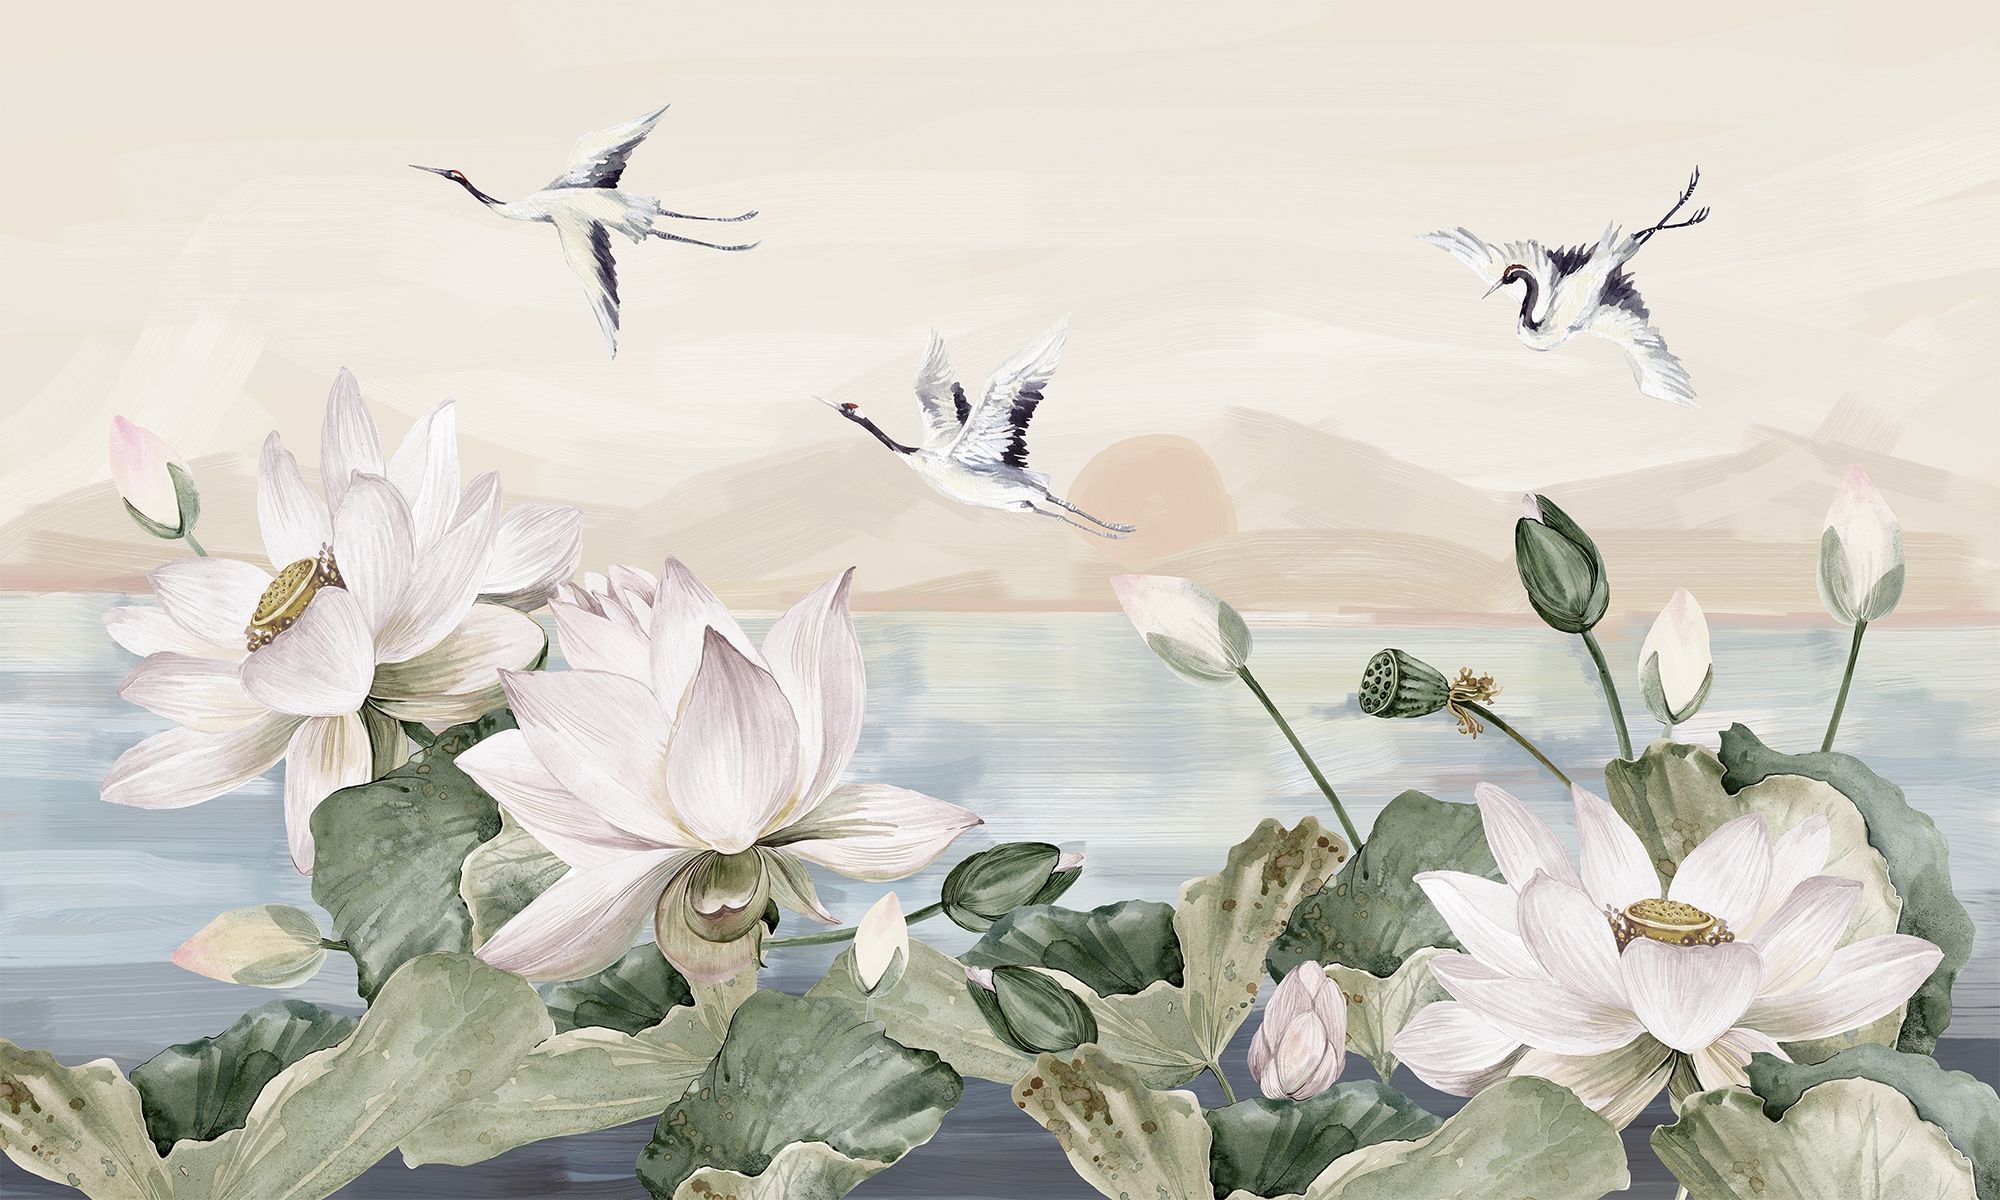 white lotus flower painting